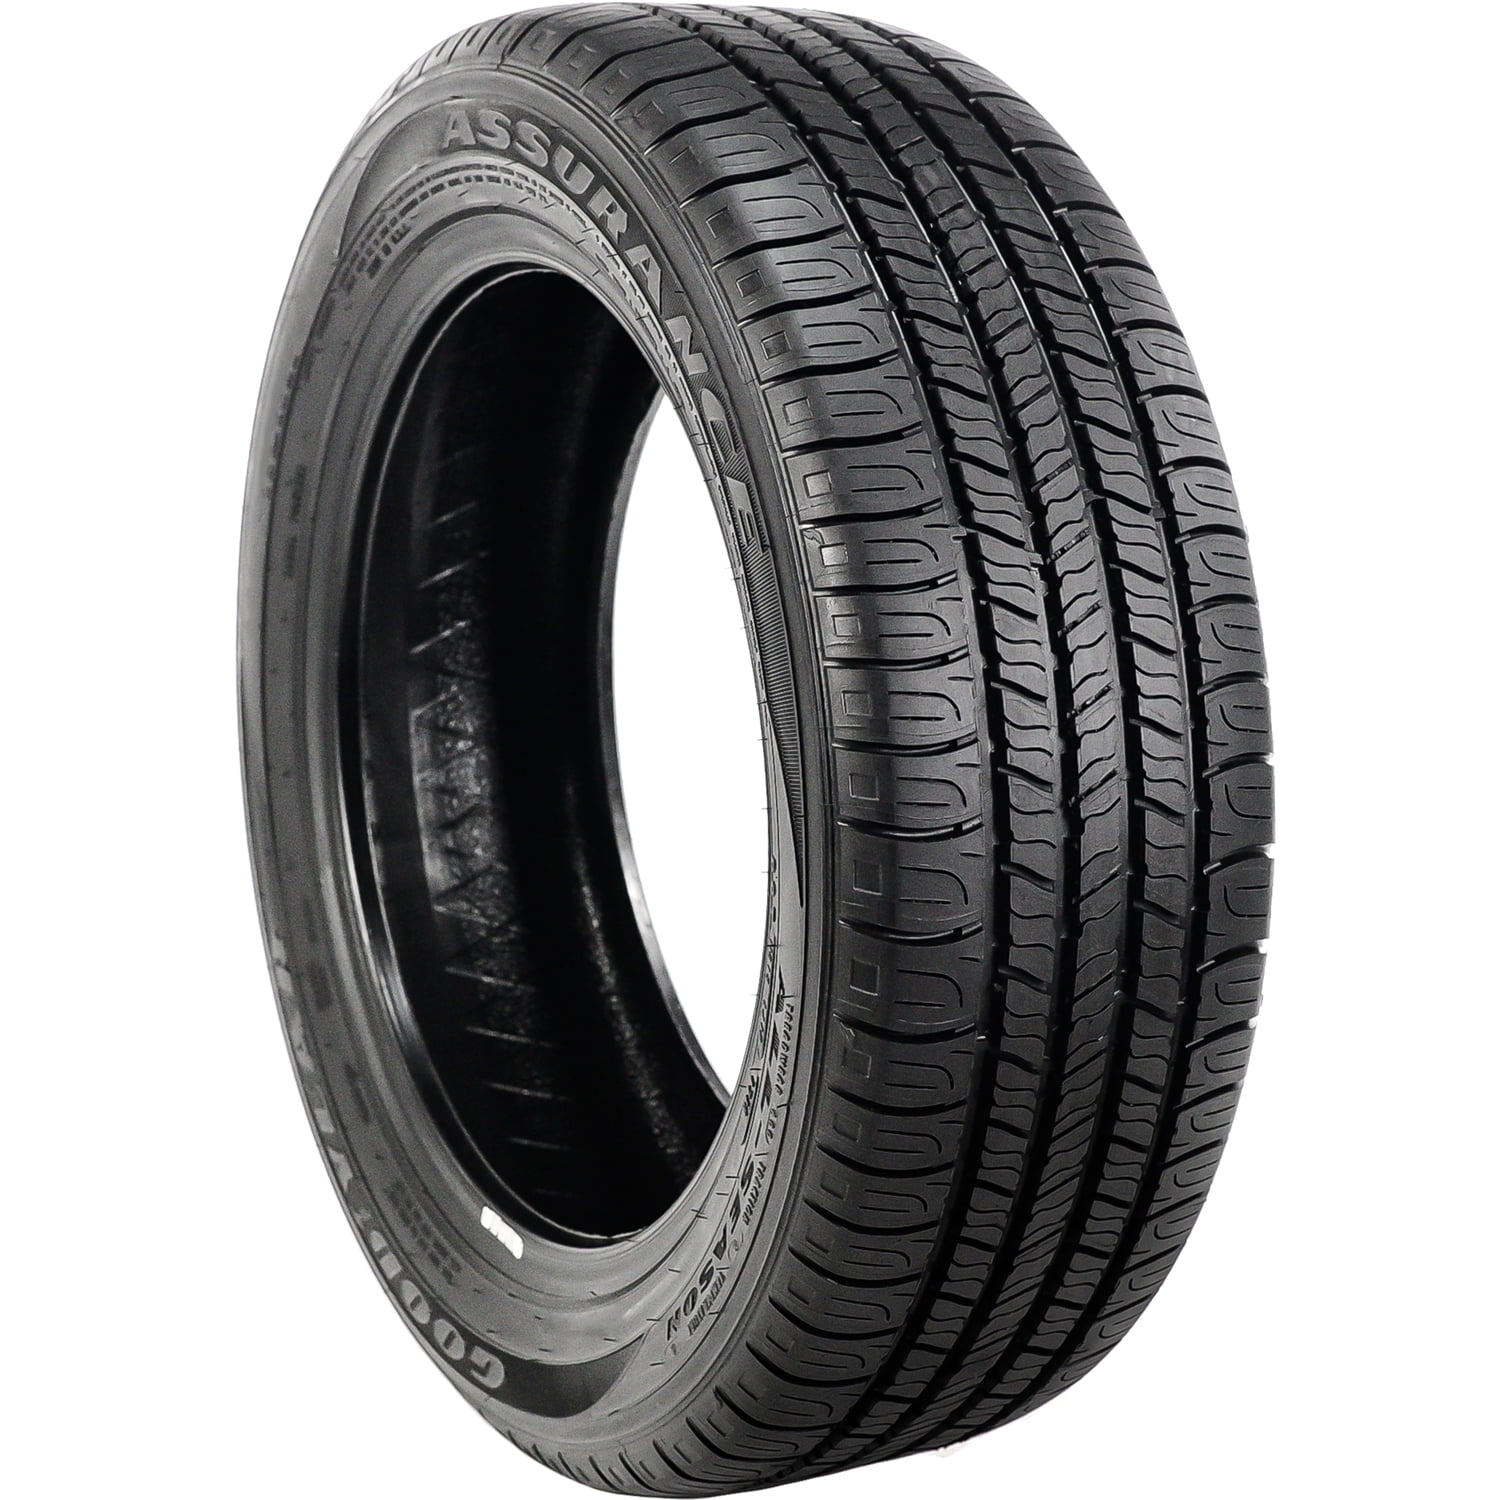 Goodyear Assurance WeatherReady Street Radial Tire-225/45R18 95V XL-ply 